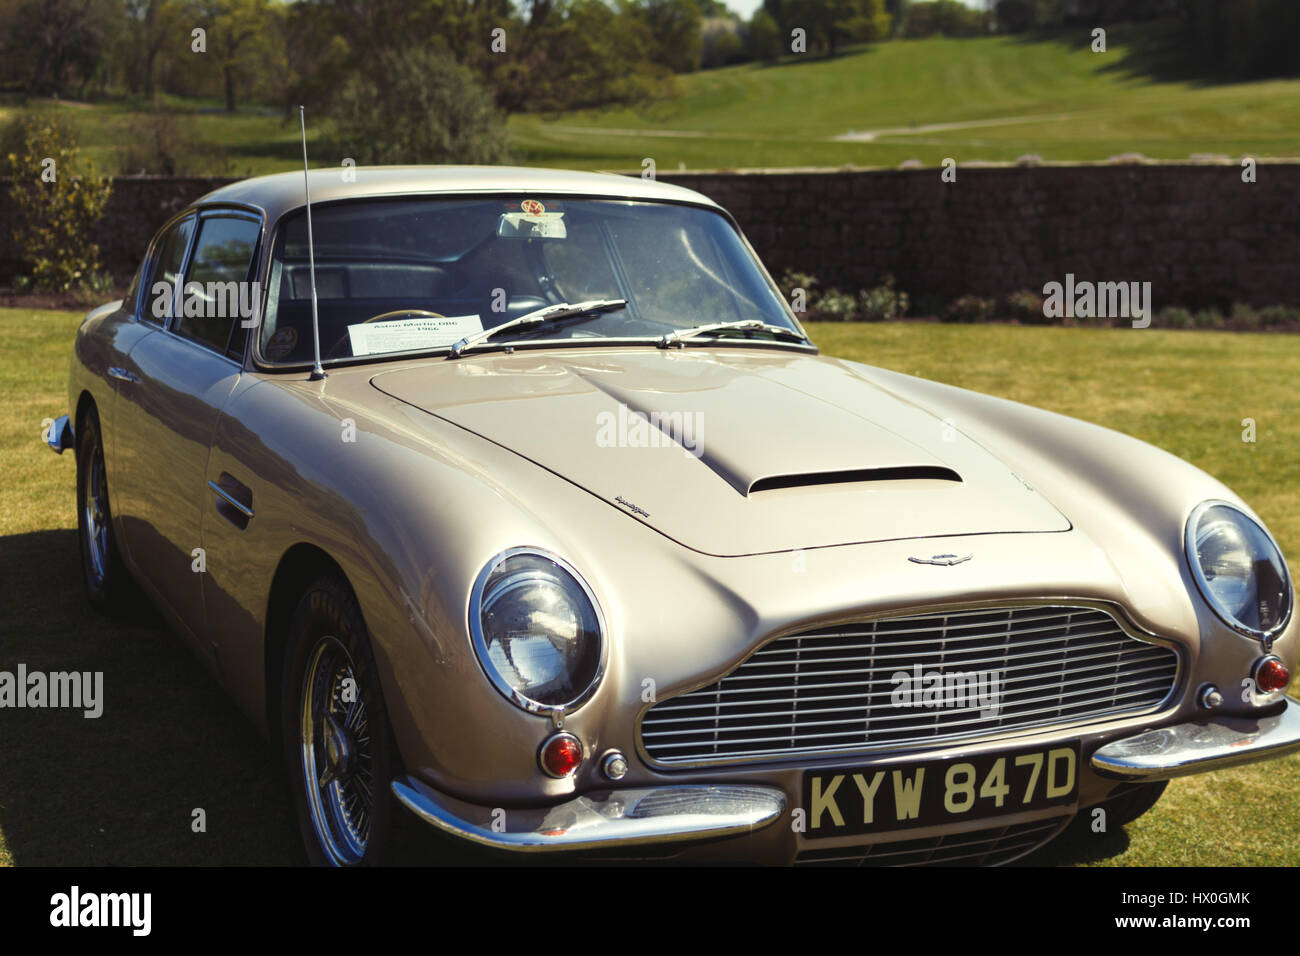 Old Fashioned Aston Martin Car Stock Photo - Alamy